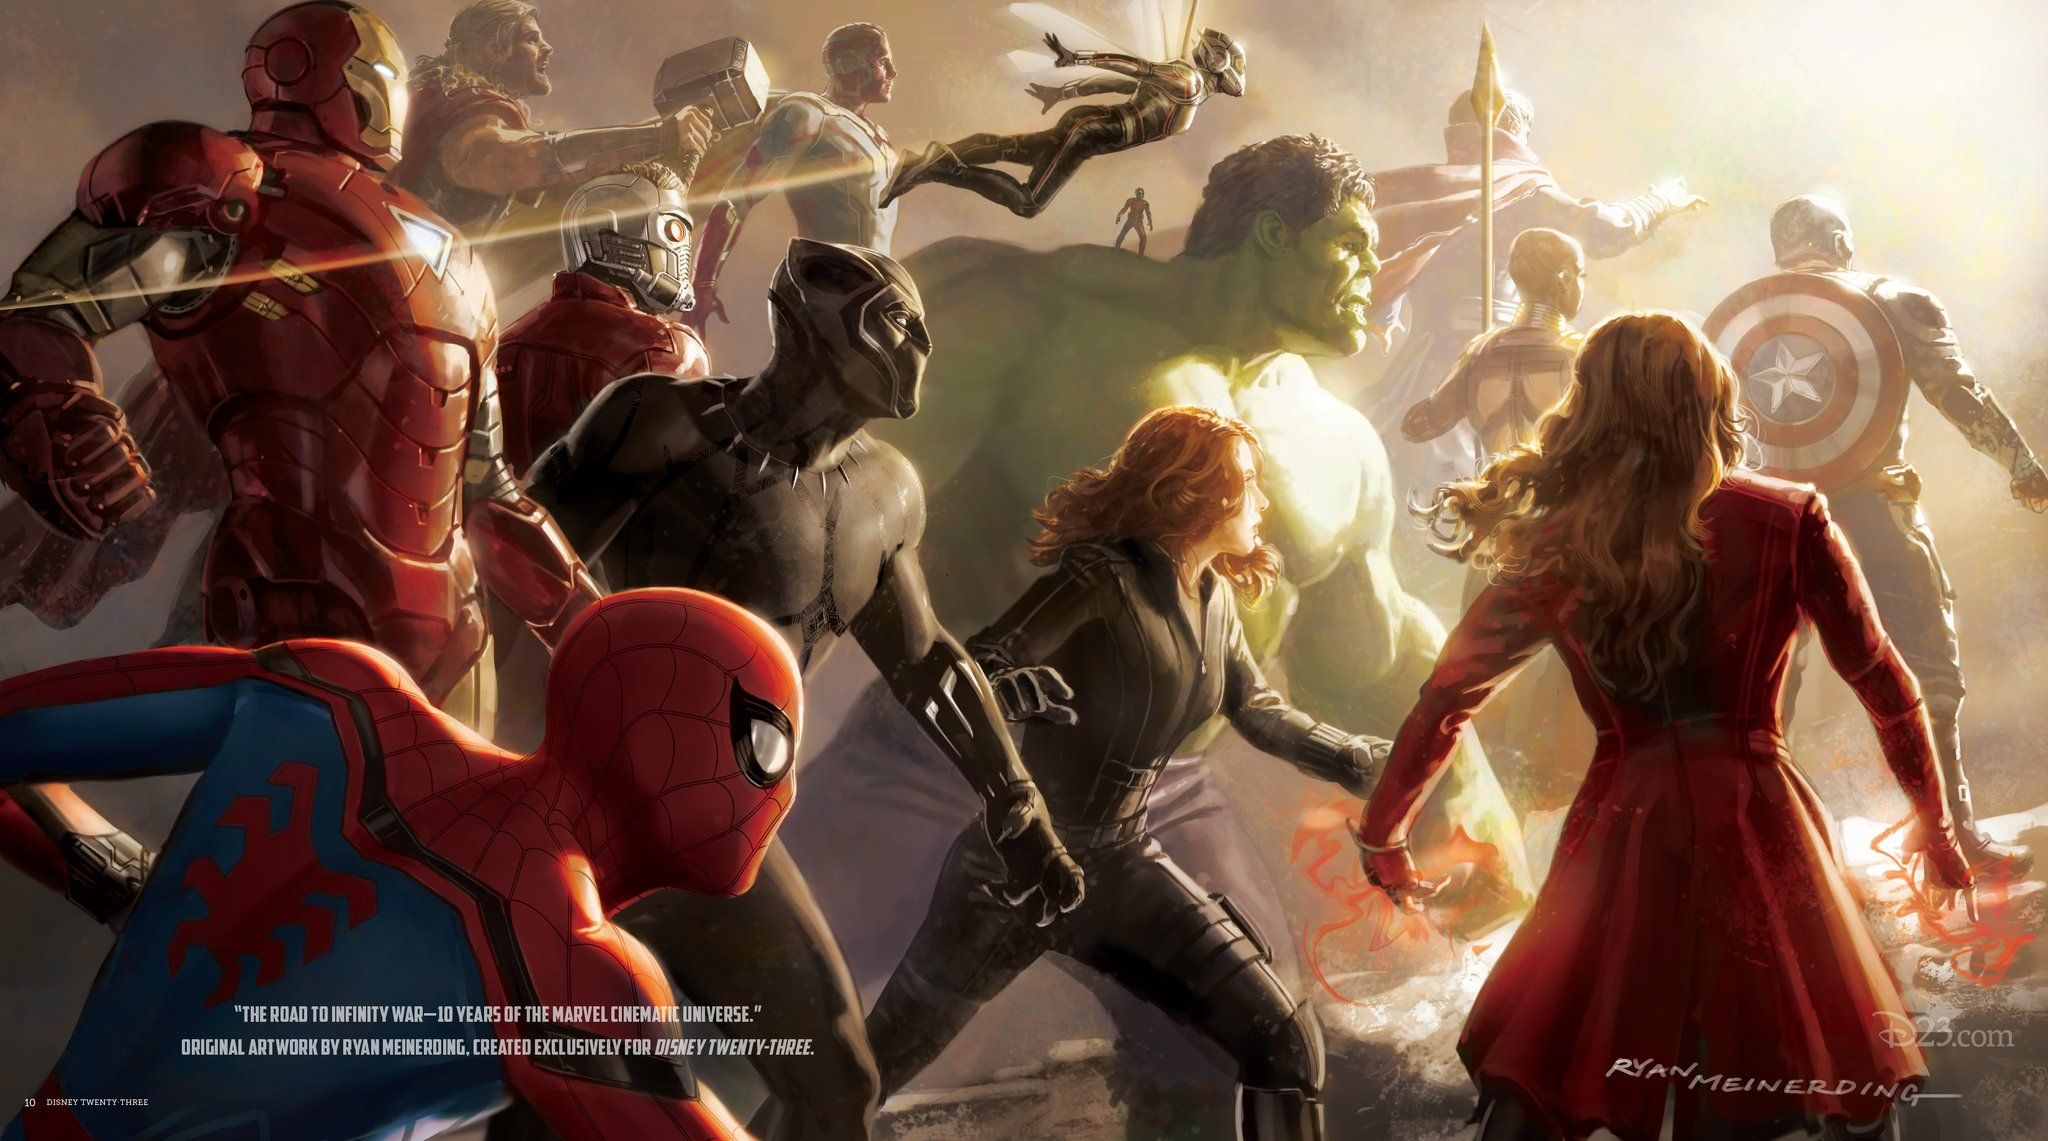 Marvels D23 Artwork Spotlights The Wasp & Infinity War